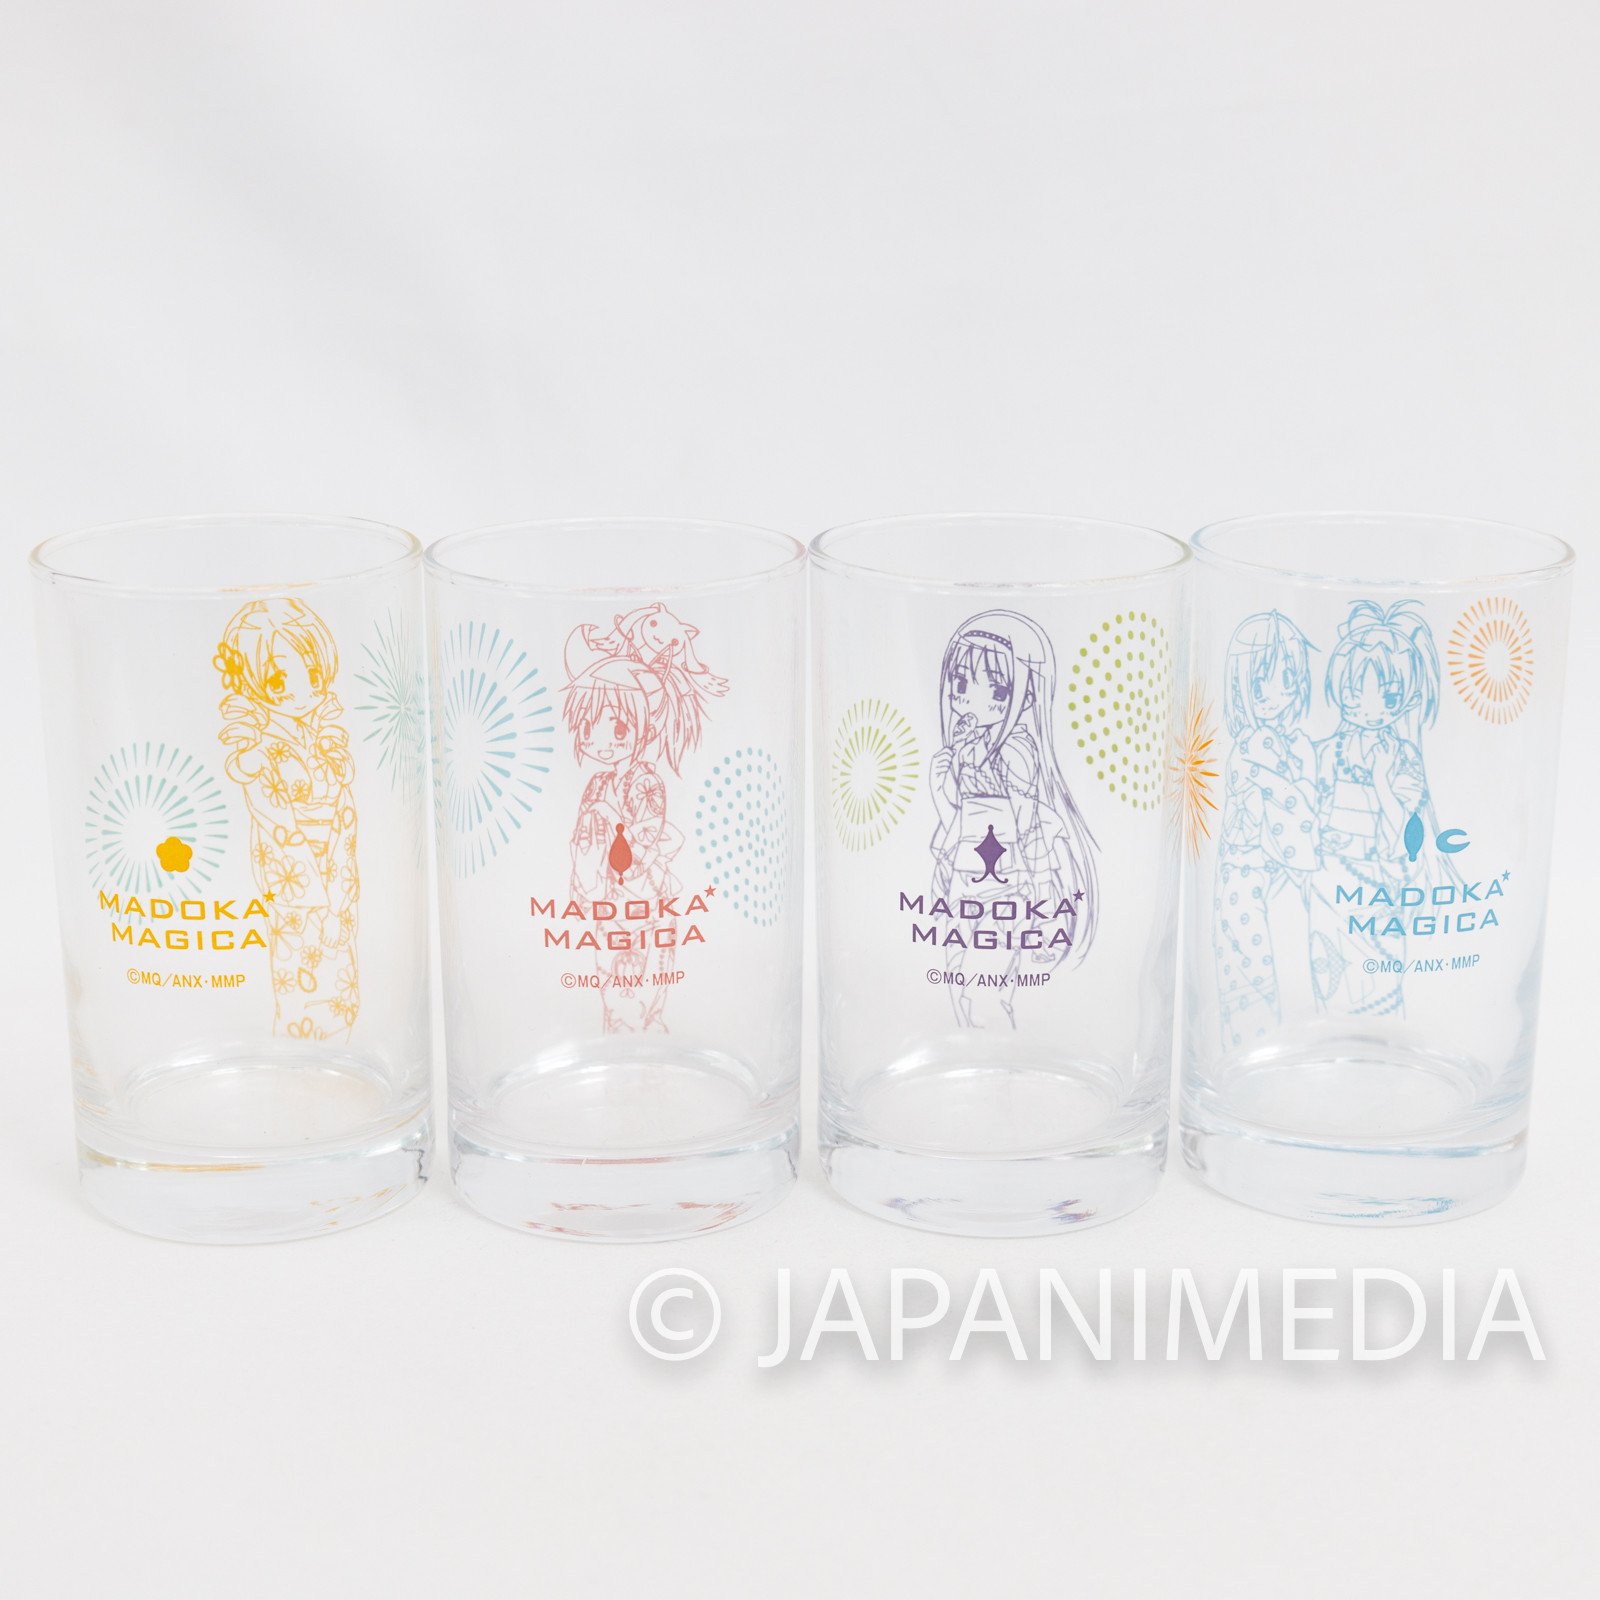 Puella Magi Madoka Magica Original Glass (Yukata ver.) 4pc Set JAPAN ANIME